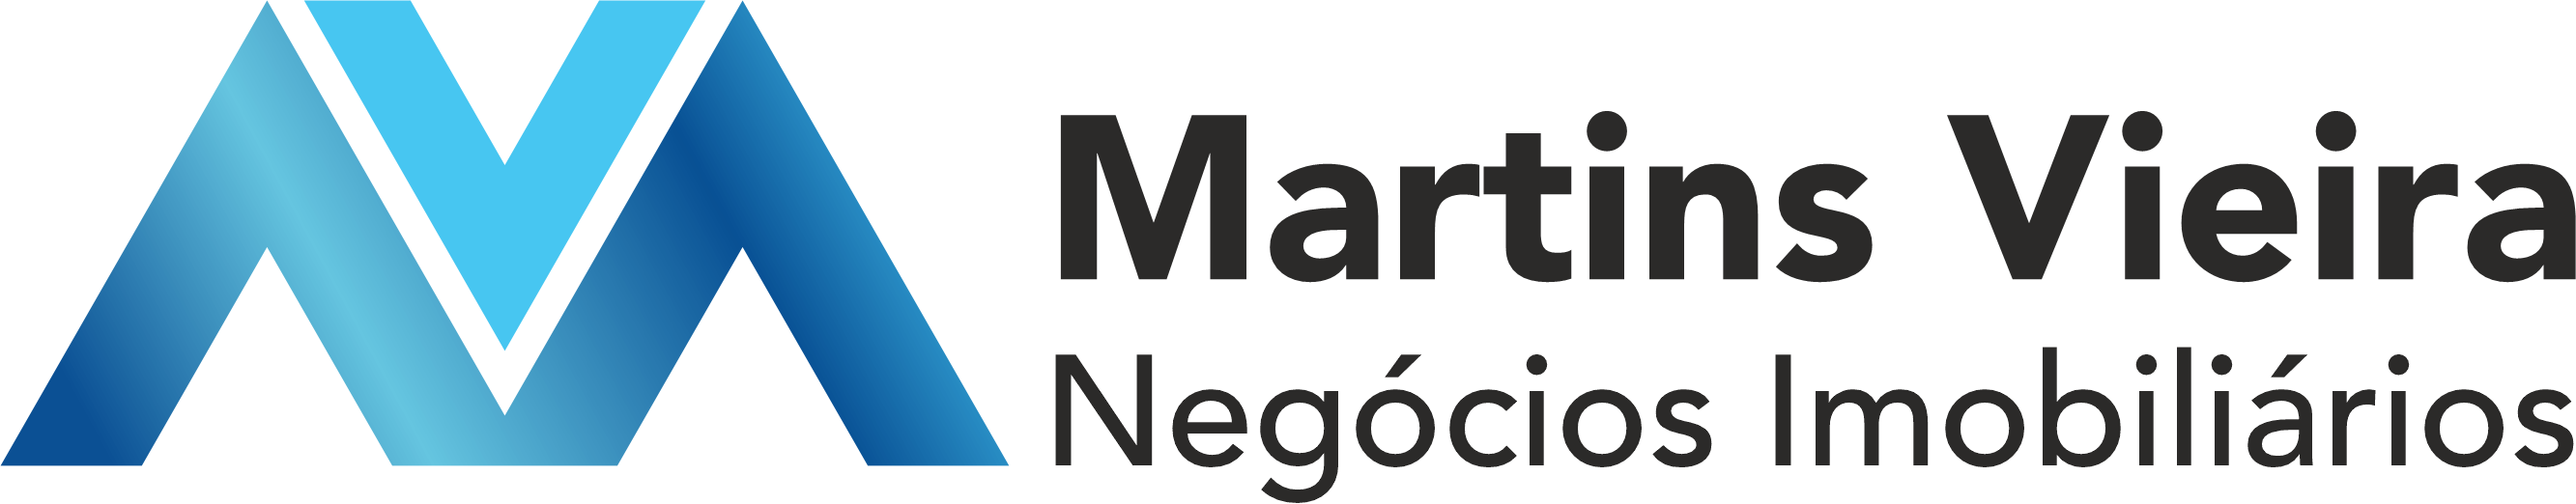 logotipo Martins Viera imoveis 